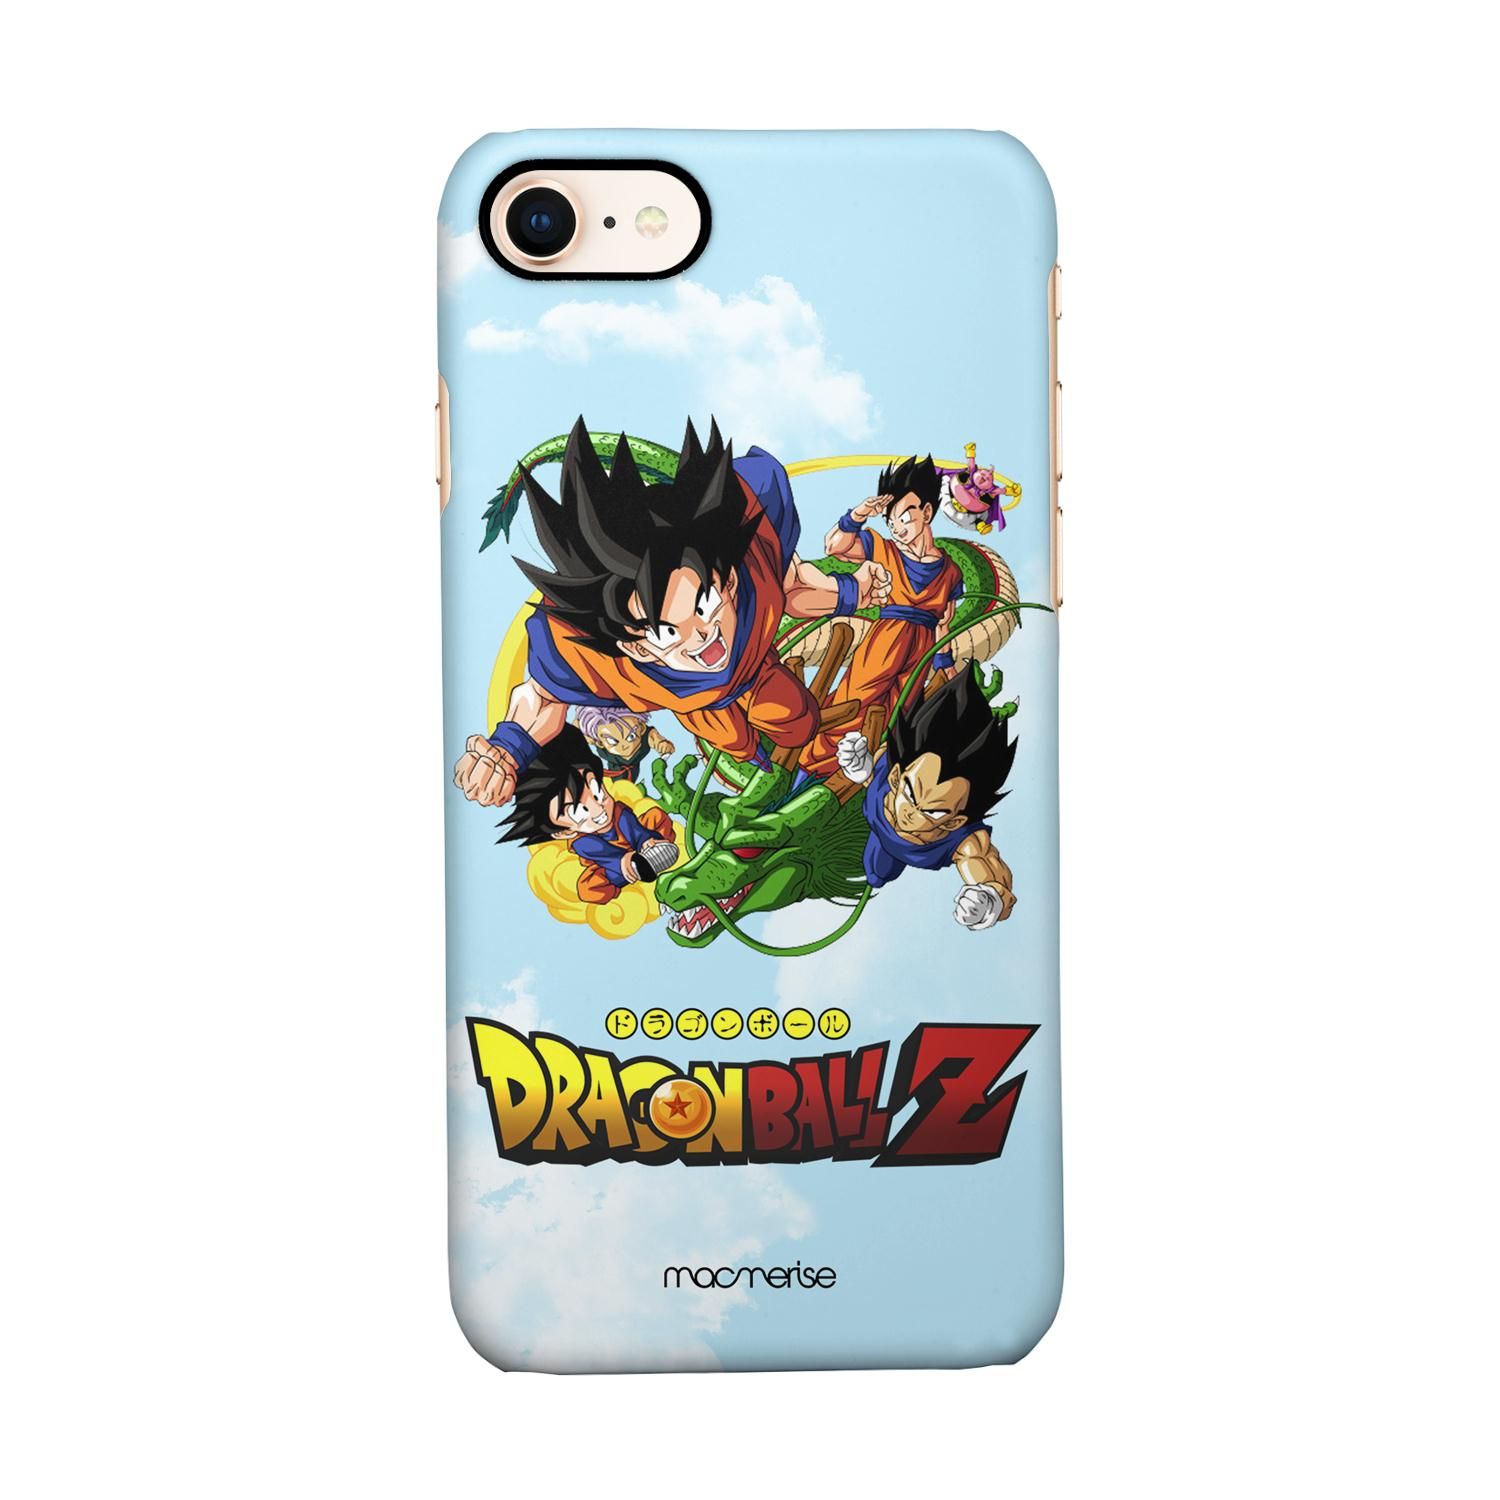 Buy Dragon ball Z - Sleek Phone Case for iPhone 8 Online